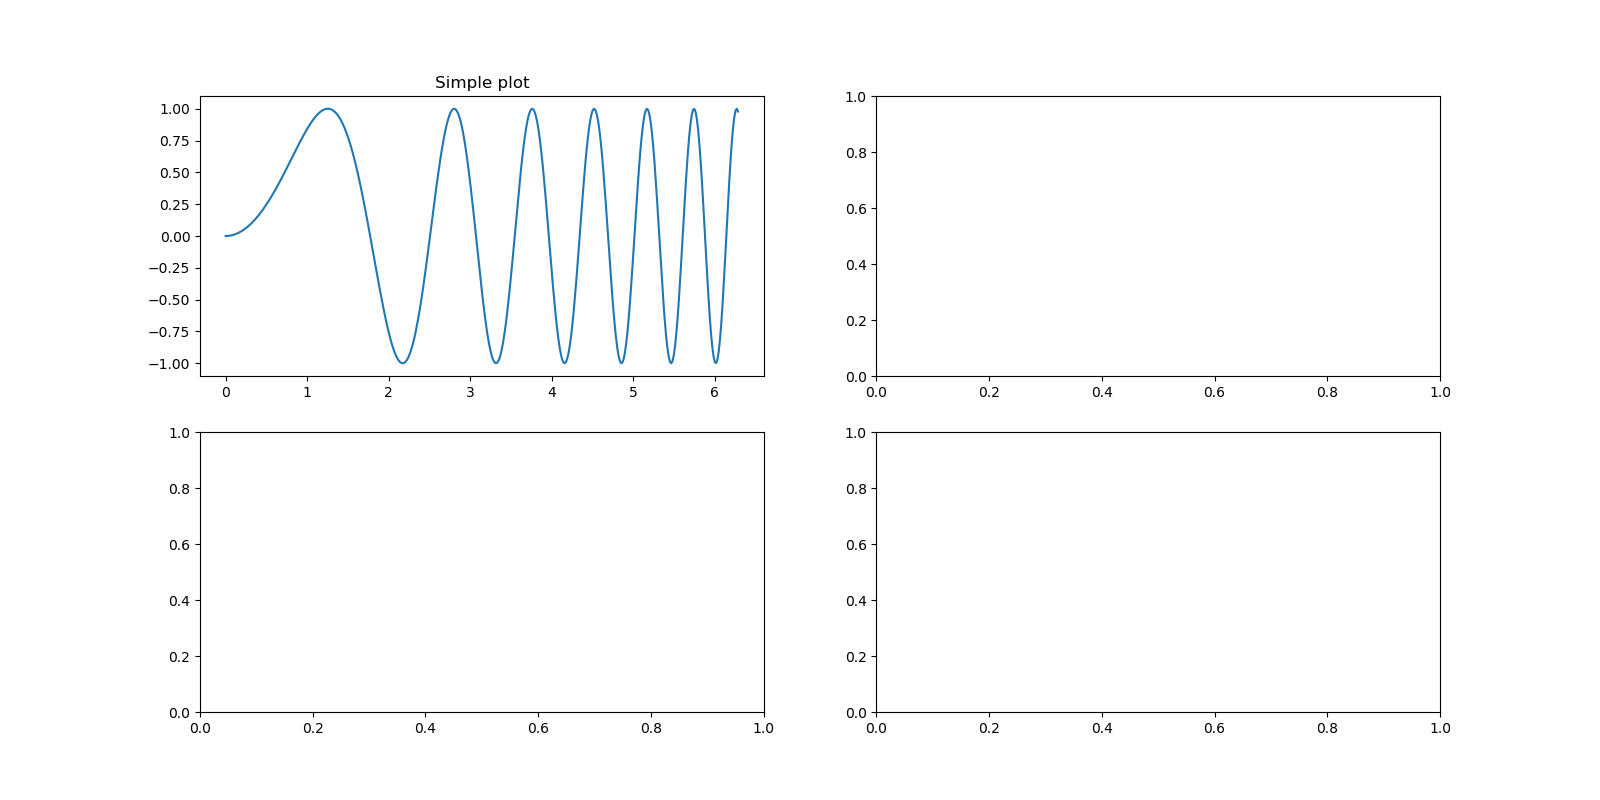 Figure_1_simple_plot.png